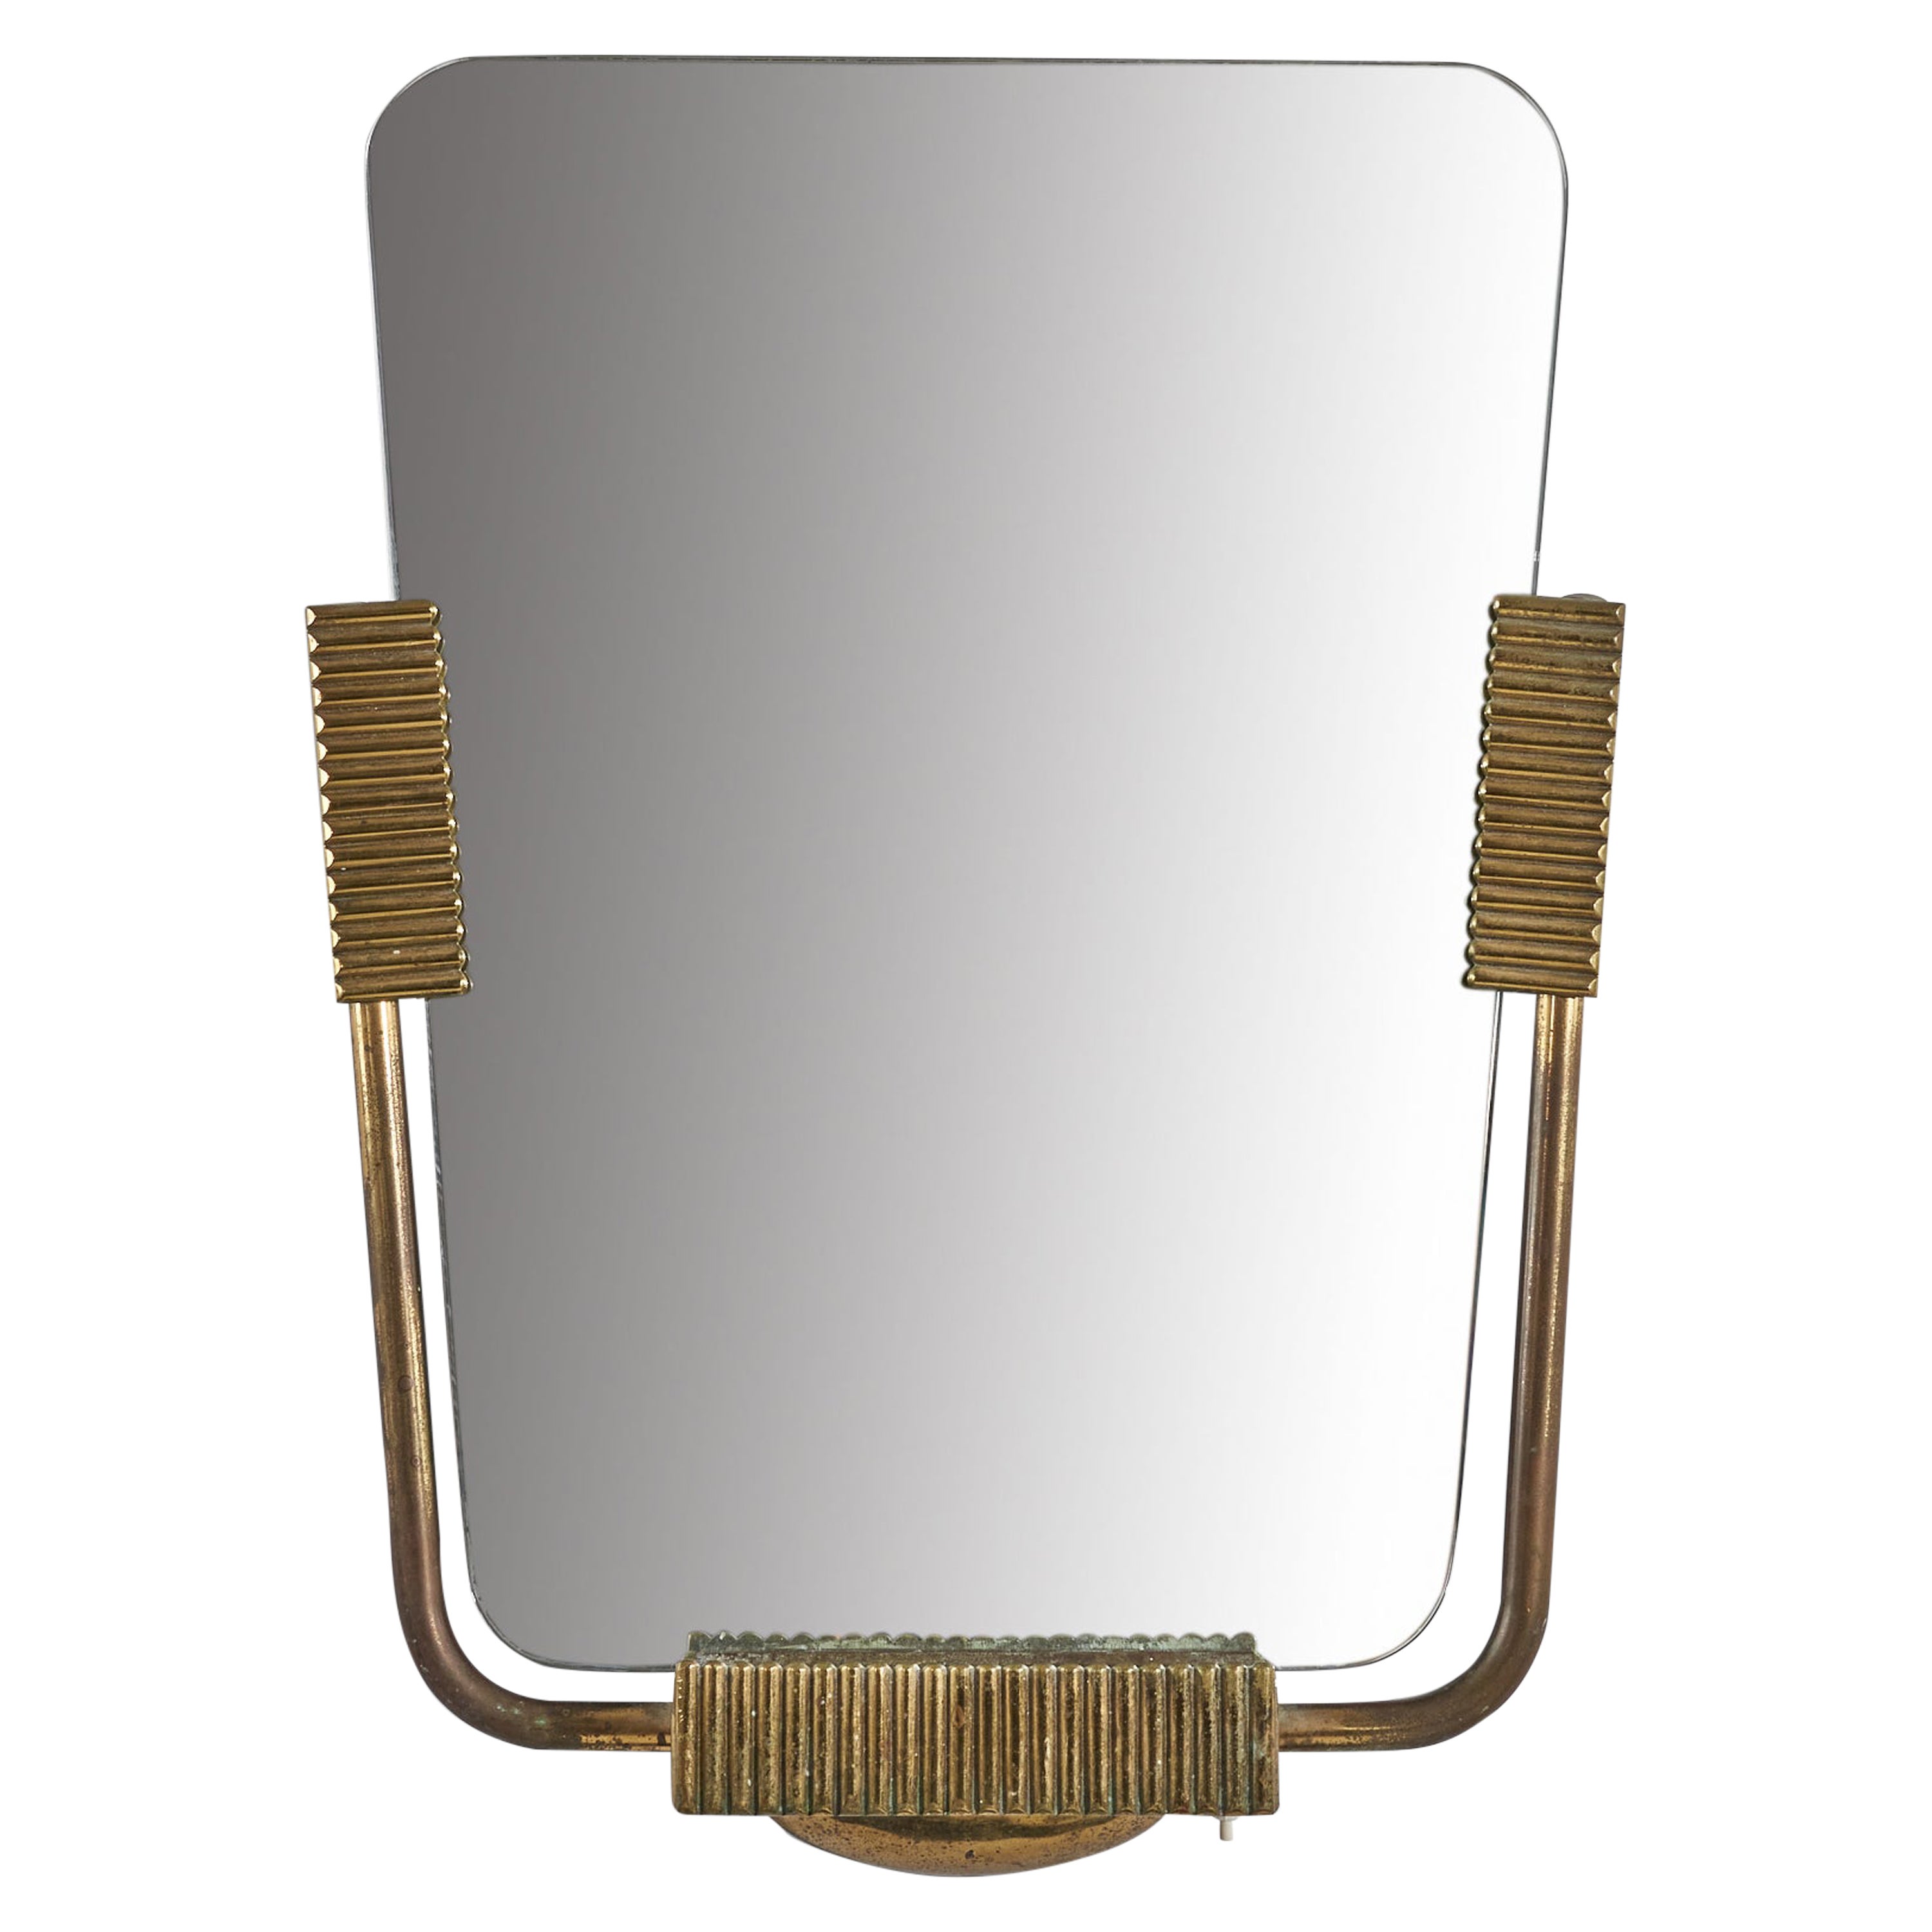 Italian Designer, Illuminated Wall Mirror, Brass, Mirror Glass, Italy, 1940s